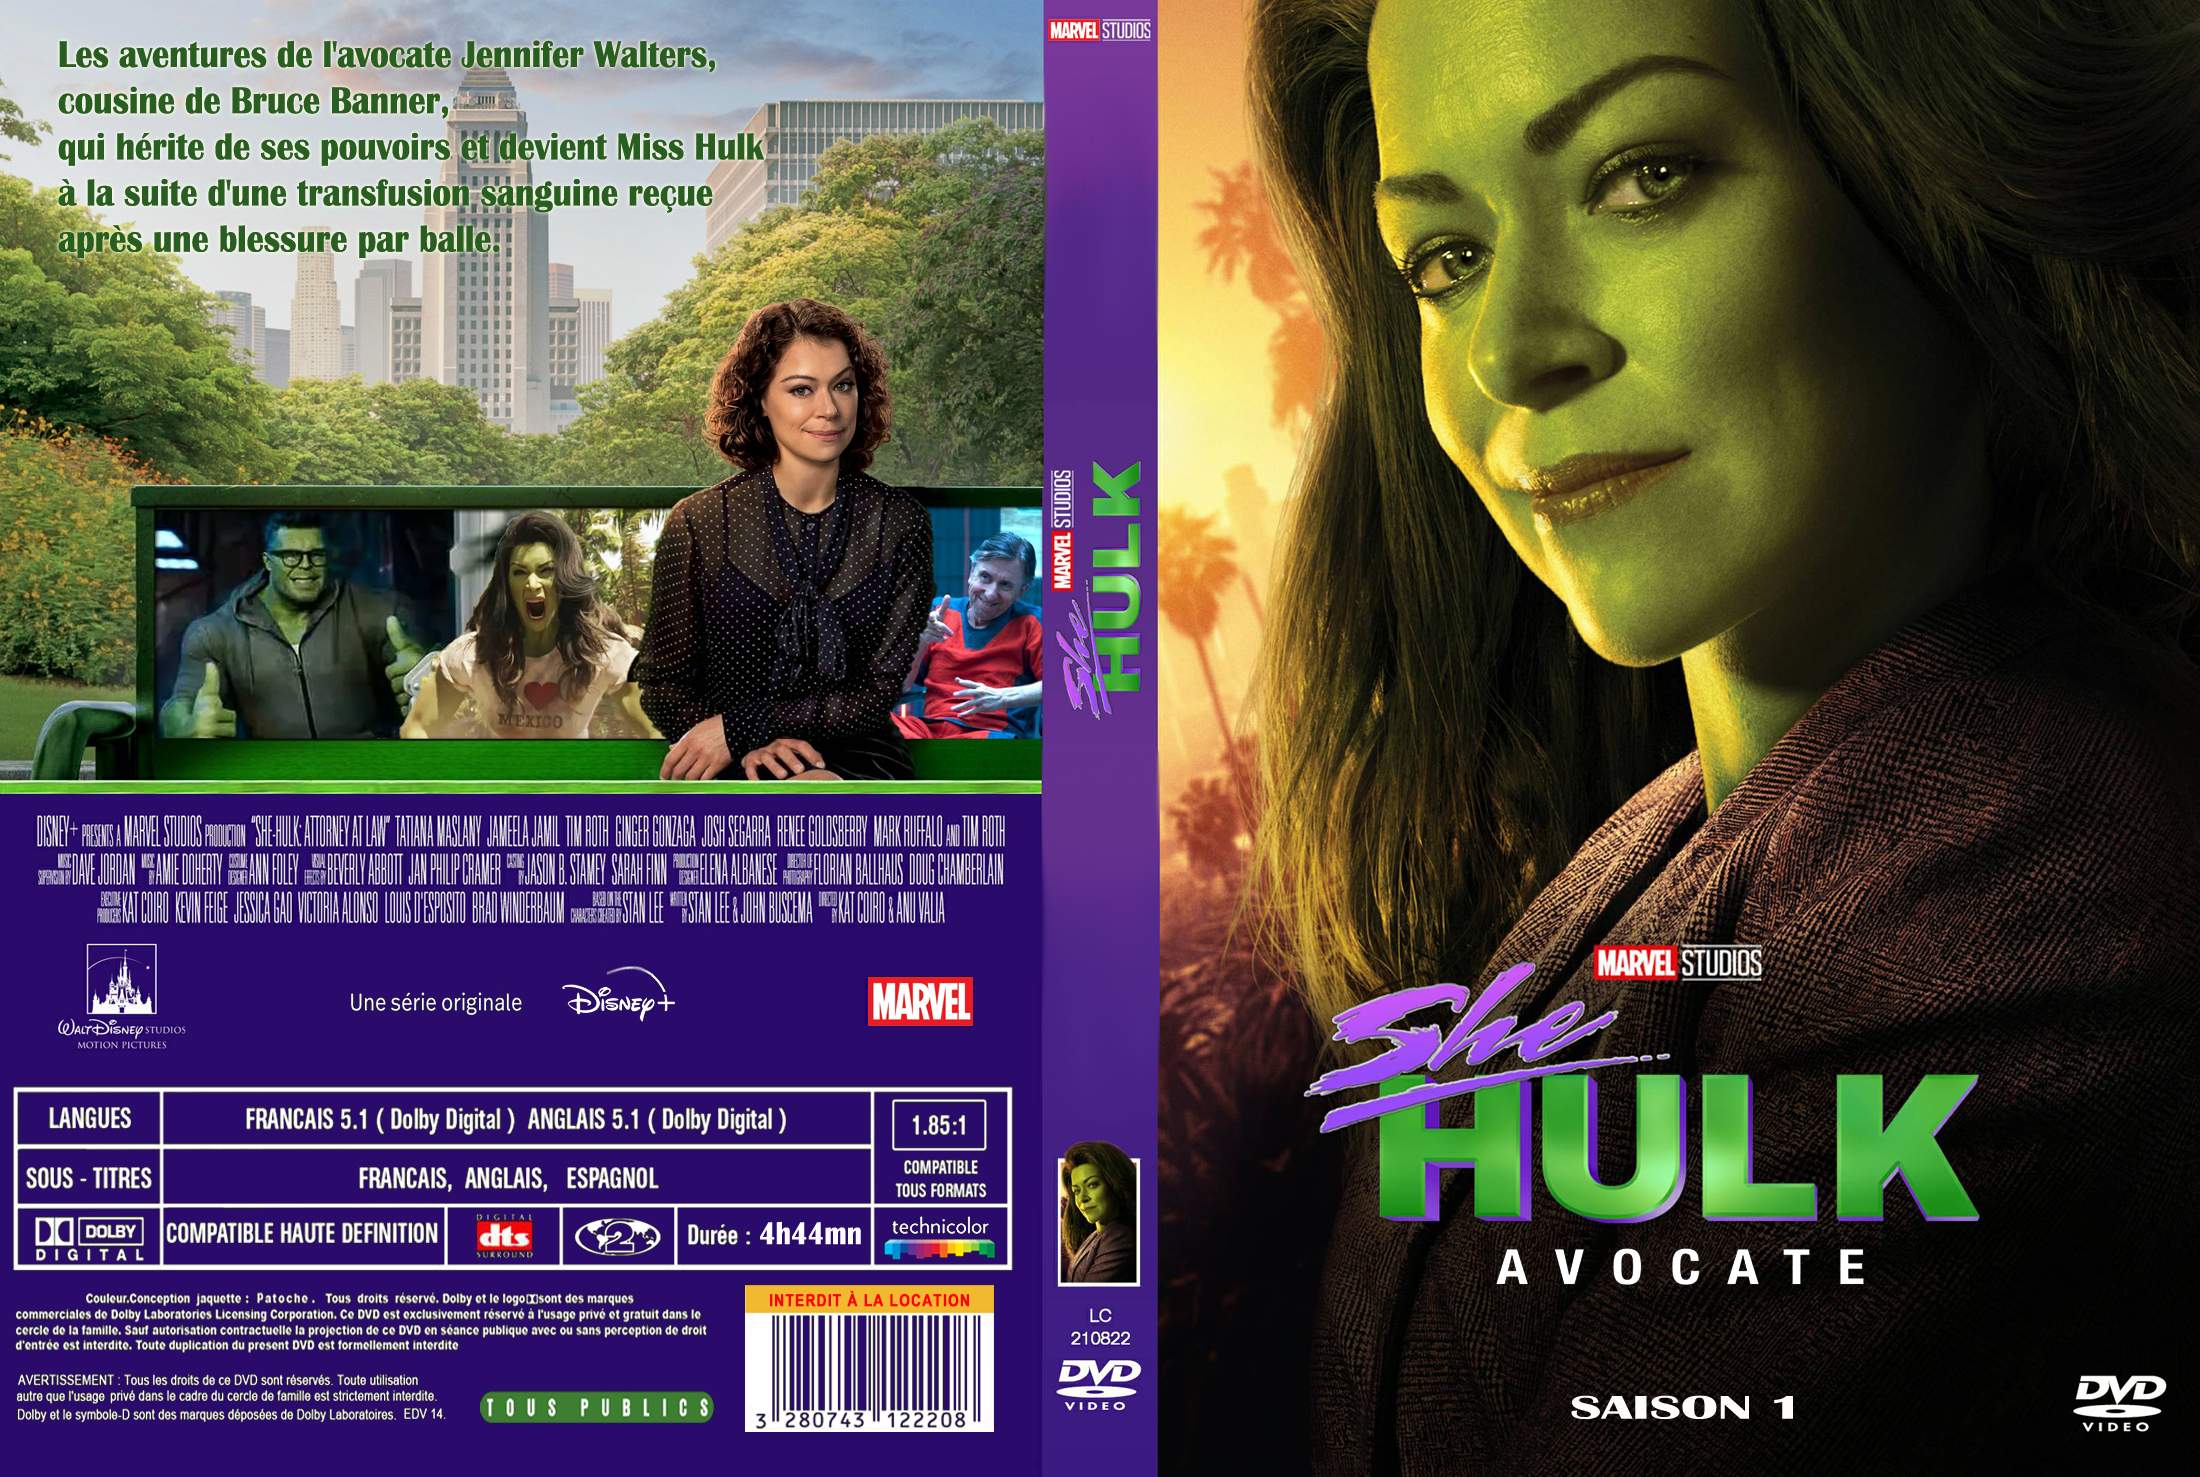 Jaquette DVD She Hulk saison 1 custom